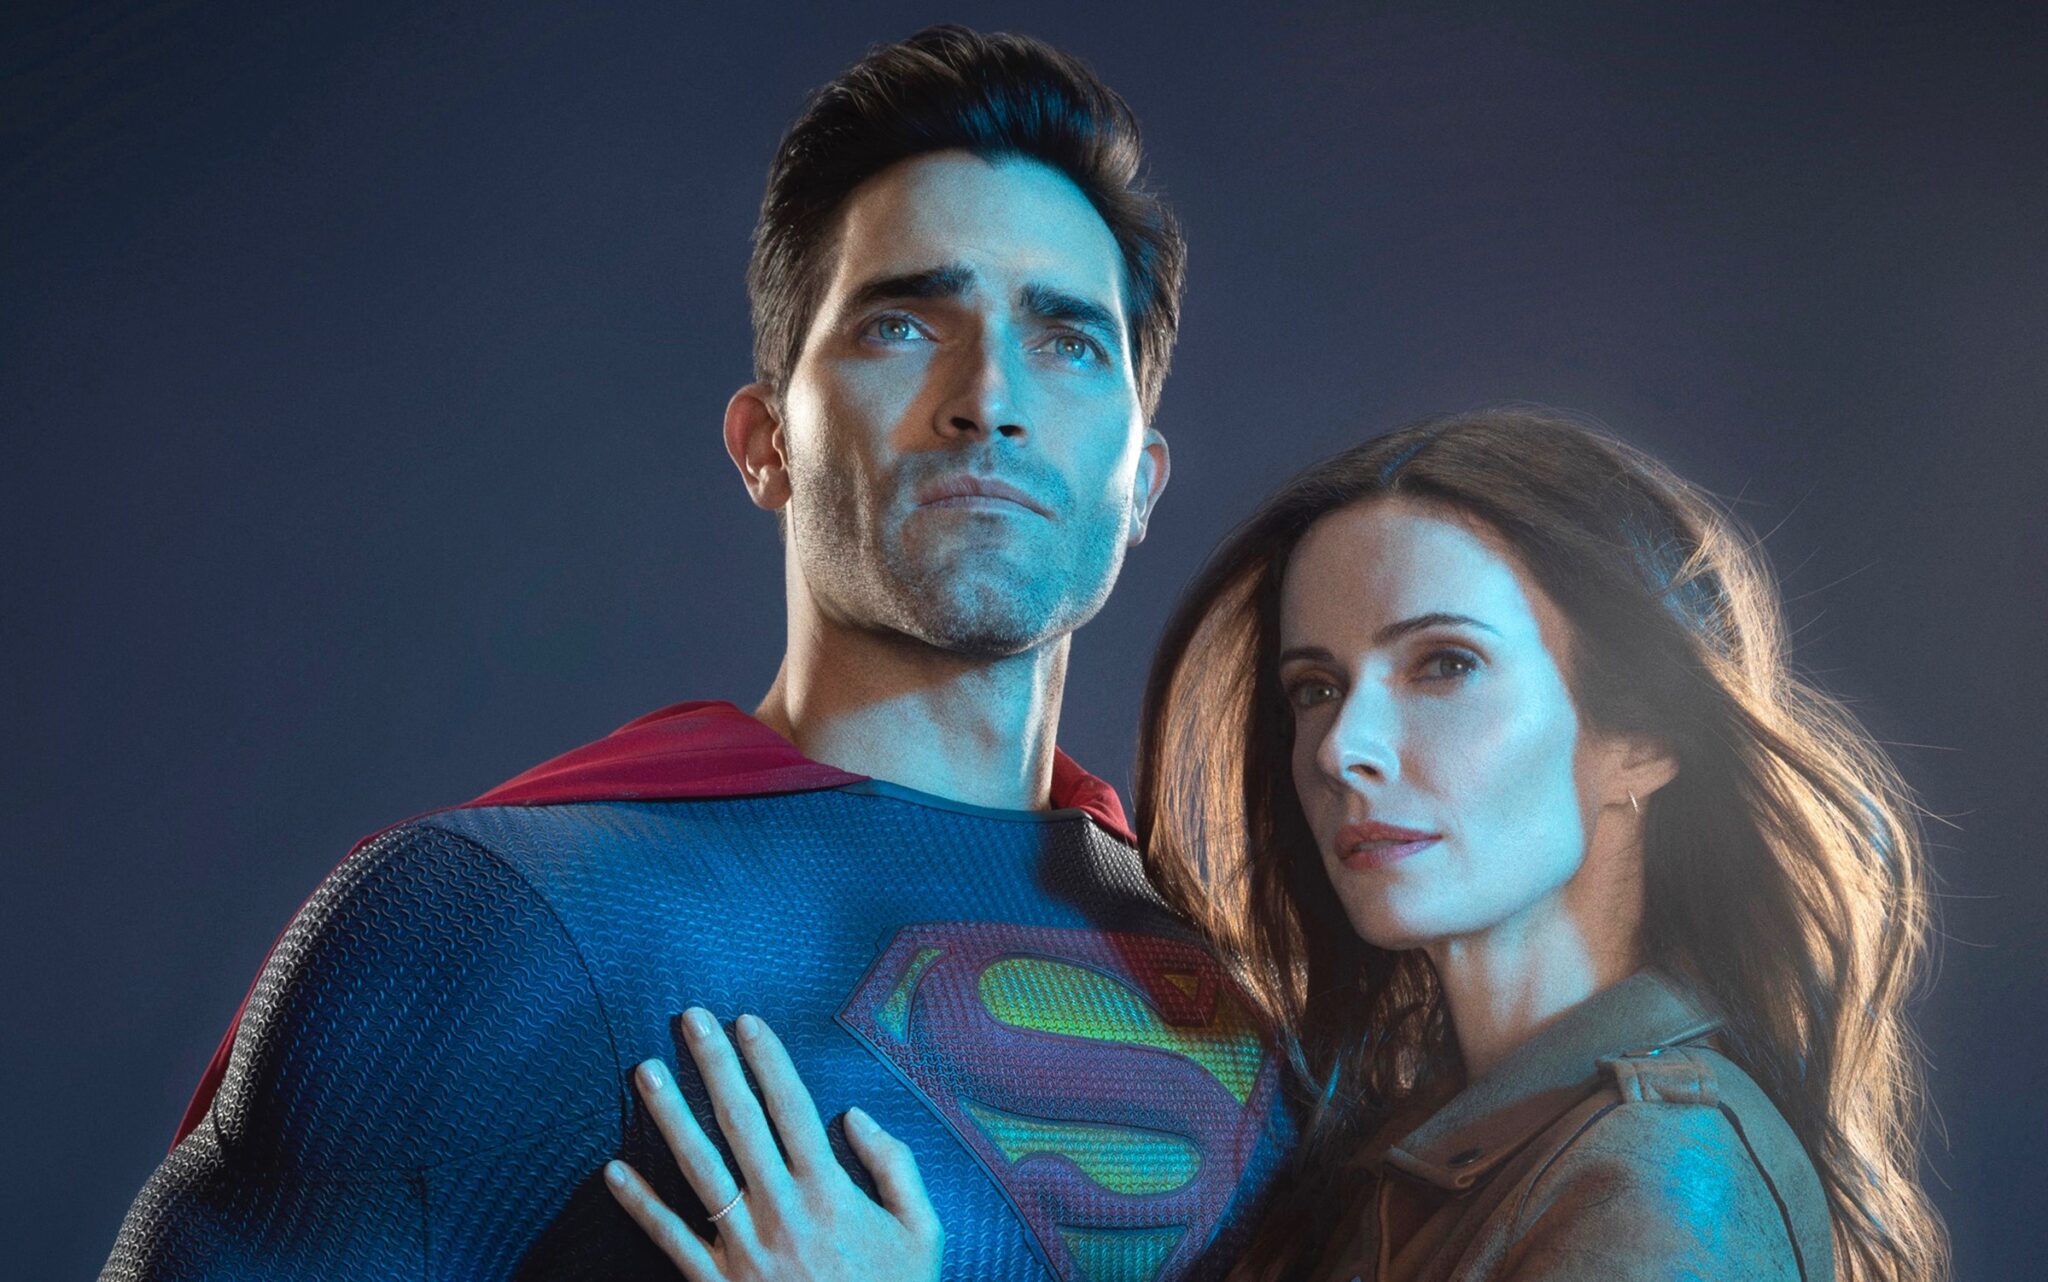 CANCELADA! A 4ª temporada de Superman & Lois será a última.